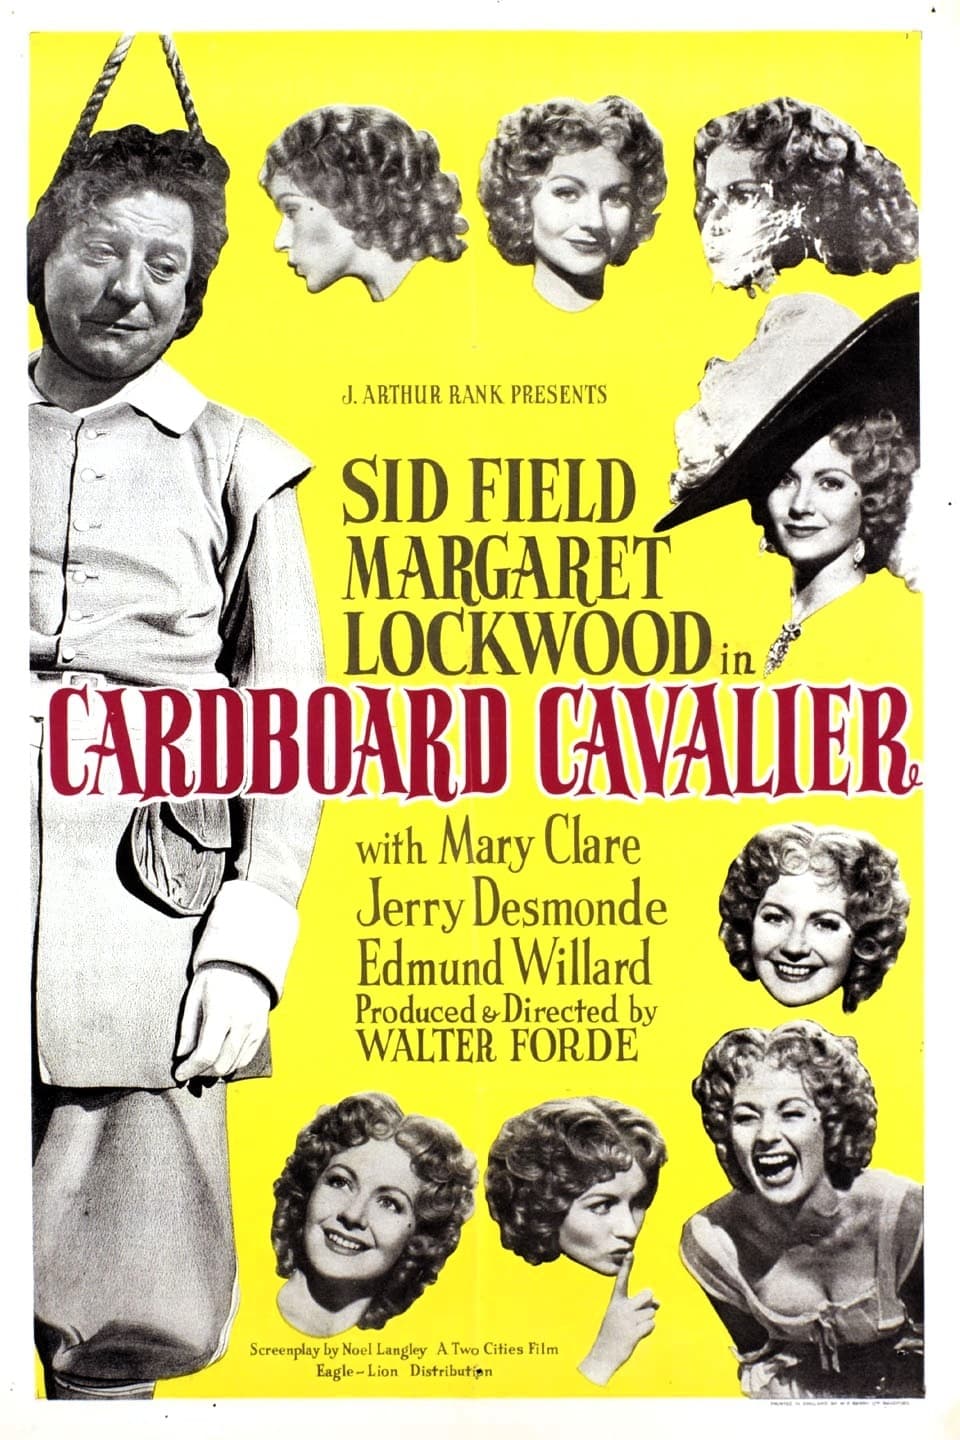 Cardboard Cavalier